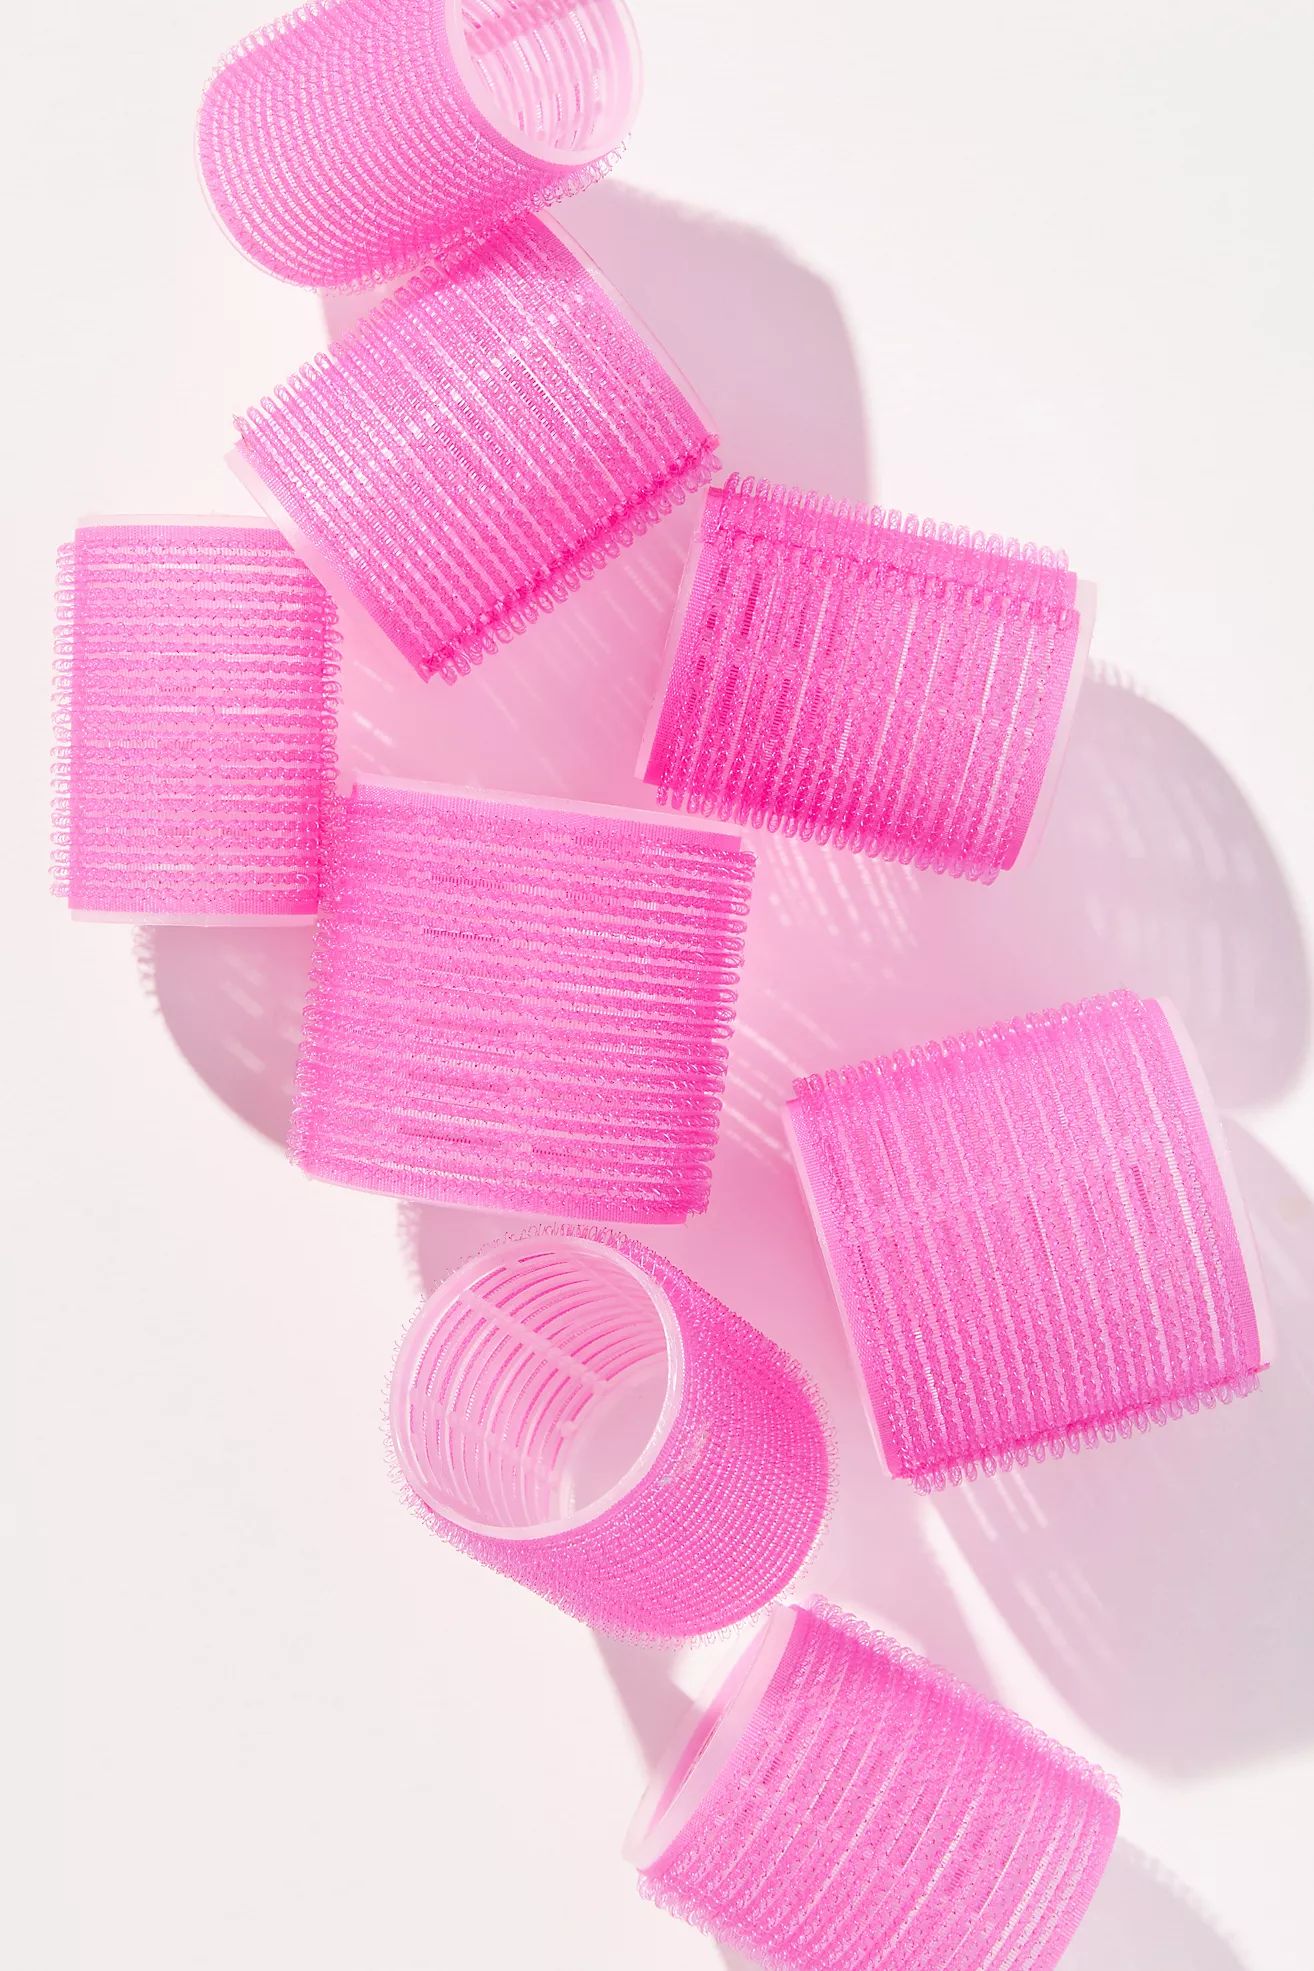 Slick Hair Company Heatless Velcro Hair Rollers, Set of 8 | Anthropologie (US)